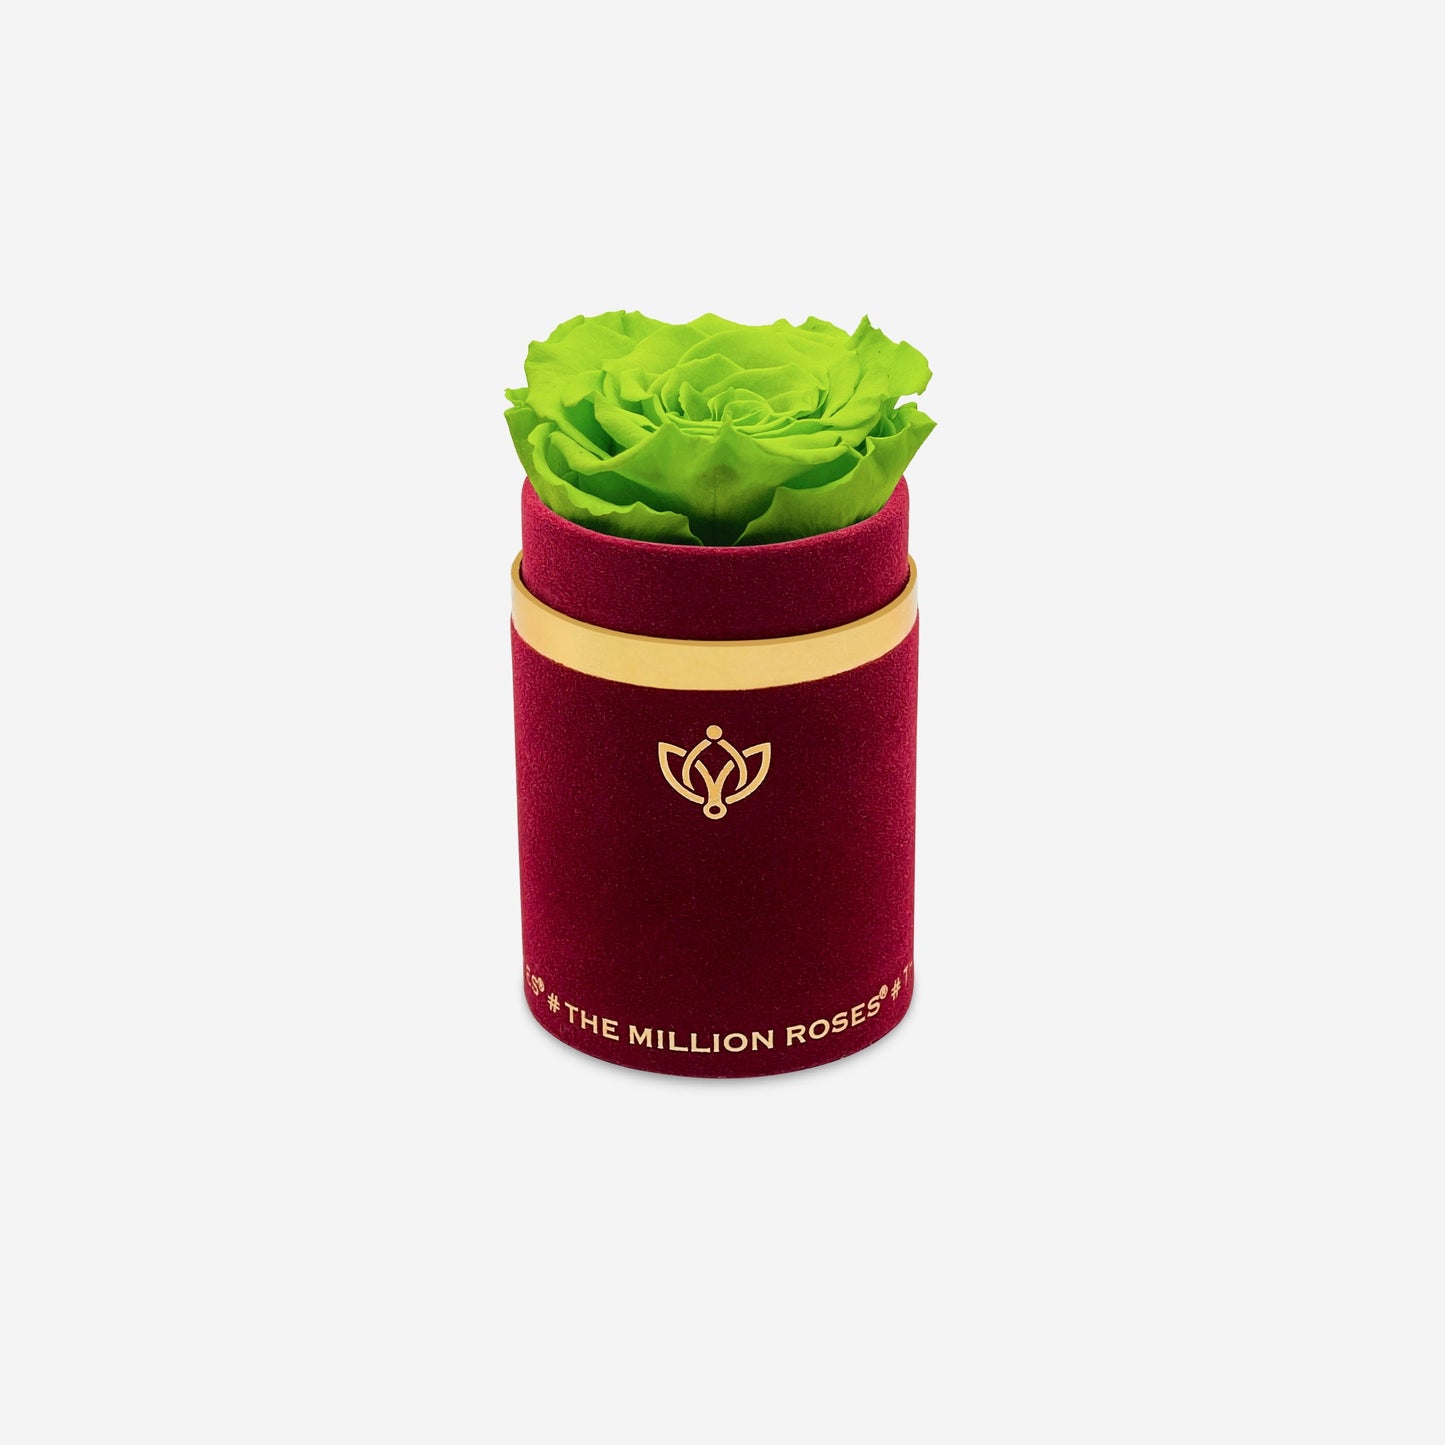 Single Bordeaux Suede Box | Light Green Rose - The Million Roses